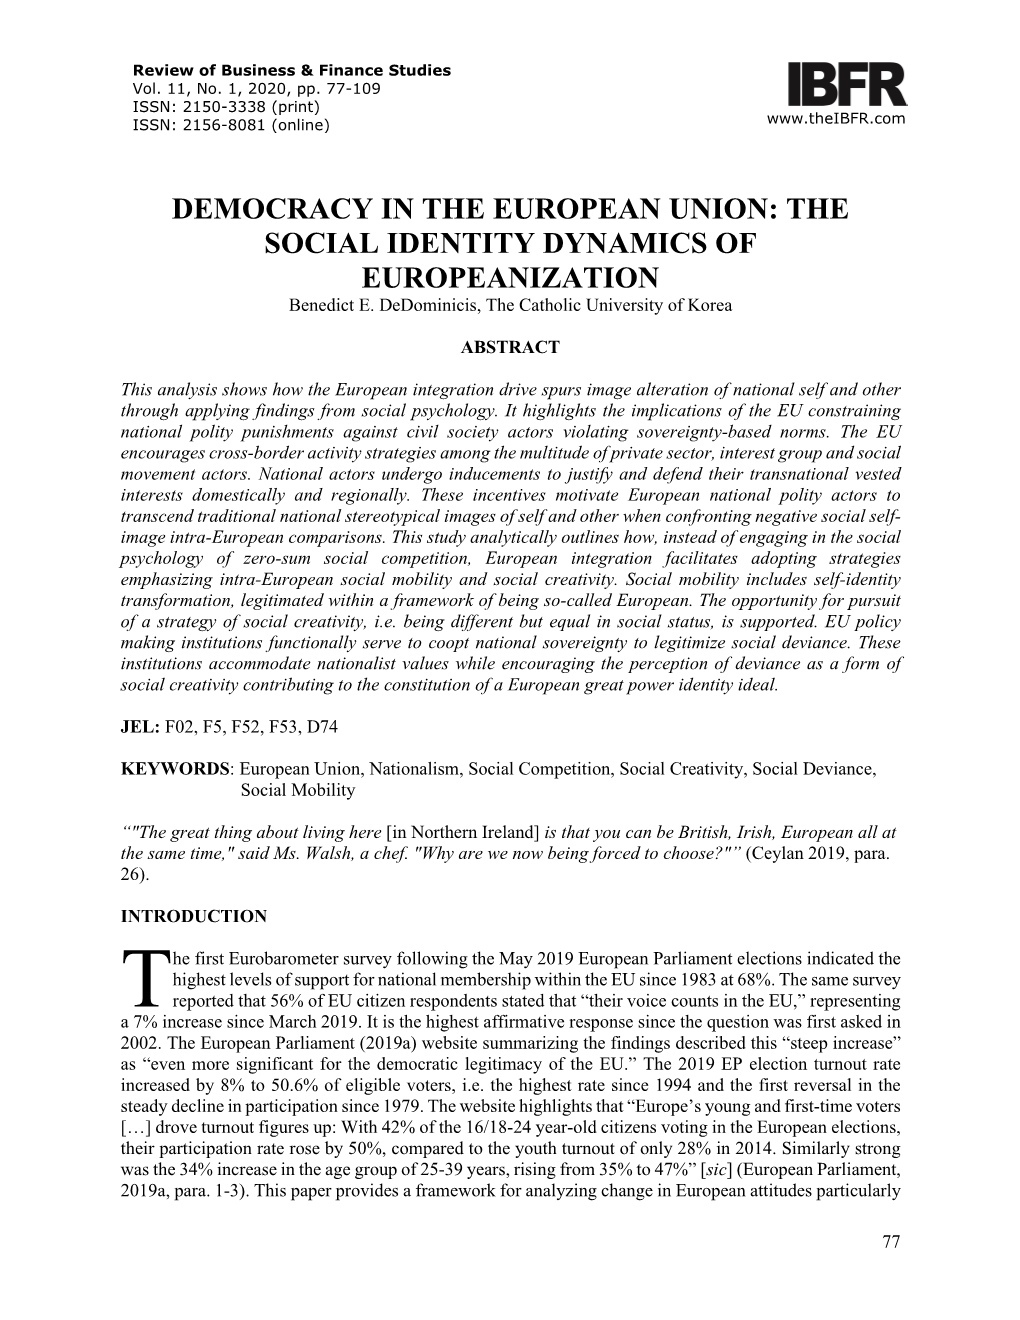 DEMOCRACY in the EUROPEAN UNION: the SOCIAL IDENTITY DYNAMICS of EUROPEANIZATION Benedict E